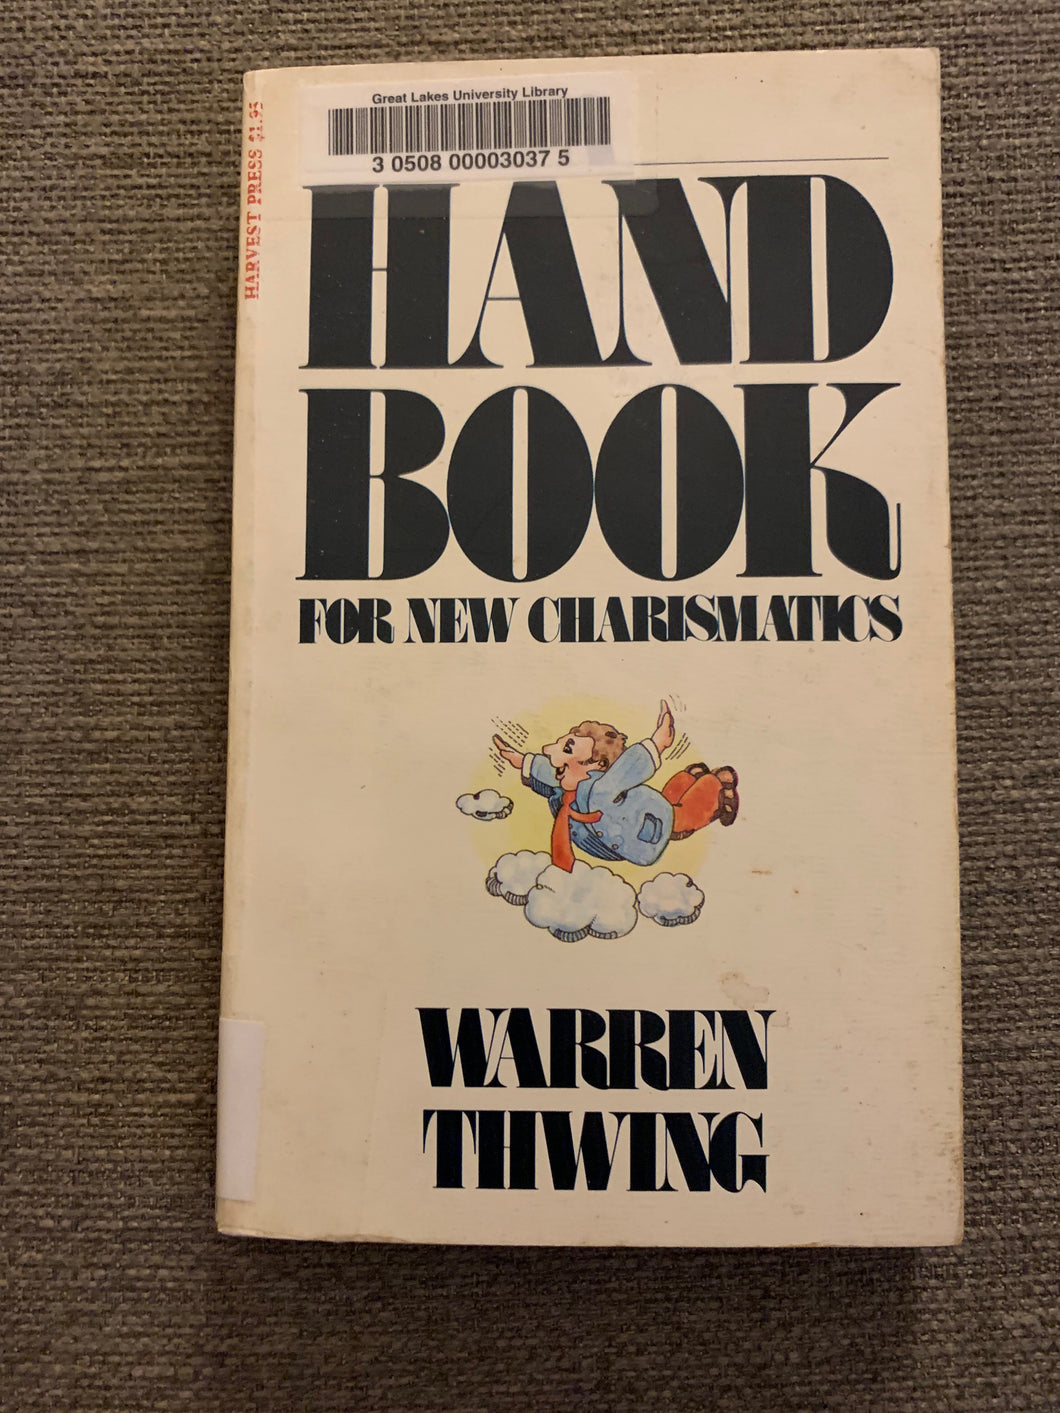 Handbook for New Charismatics by Warren Thwing